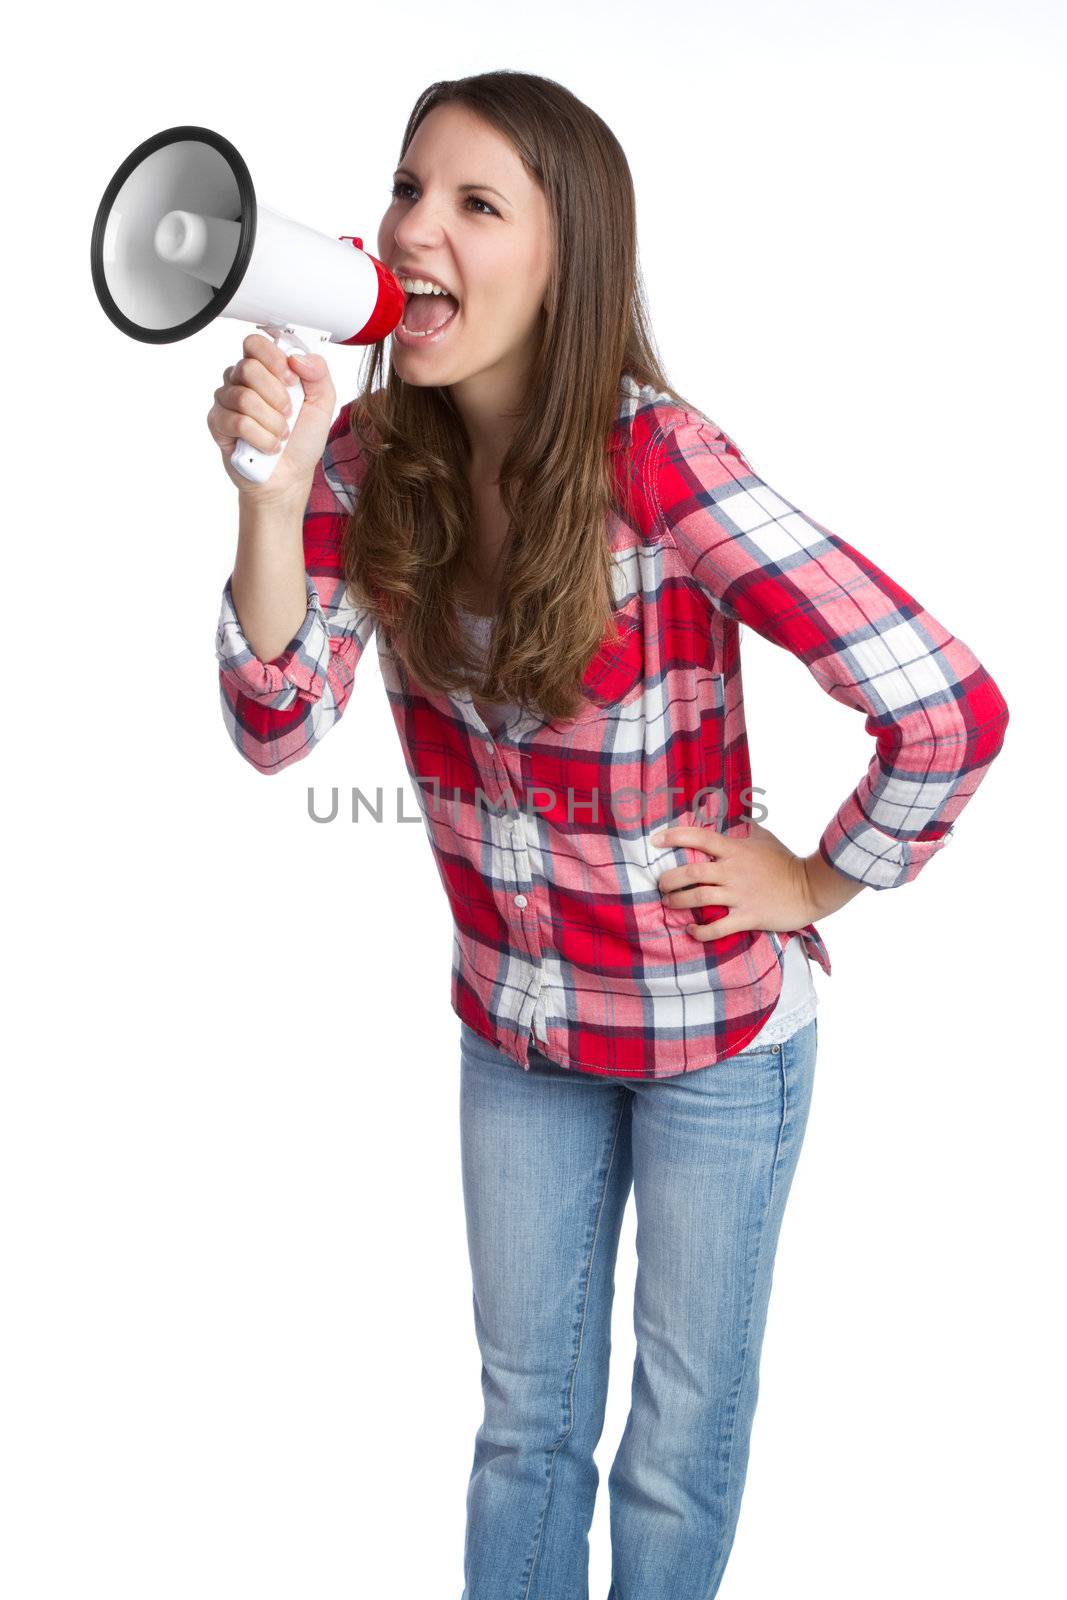 Isolated woman yelling into megaphone